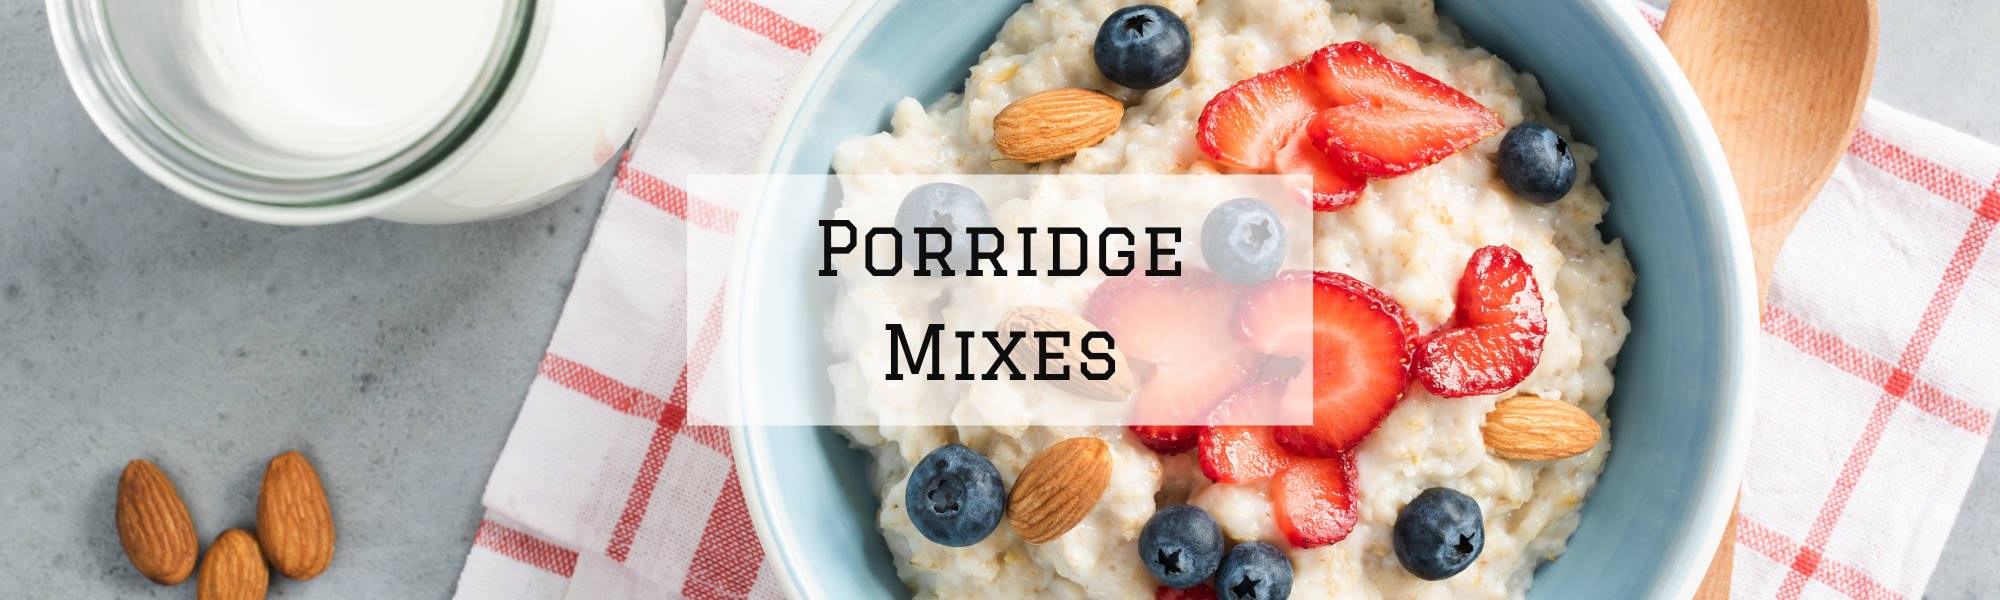 Porridge Mixes